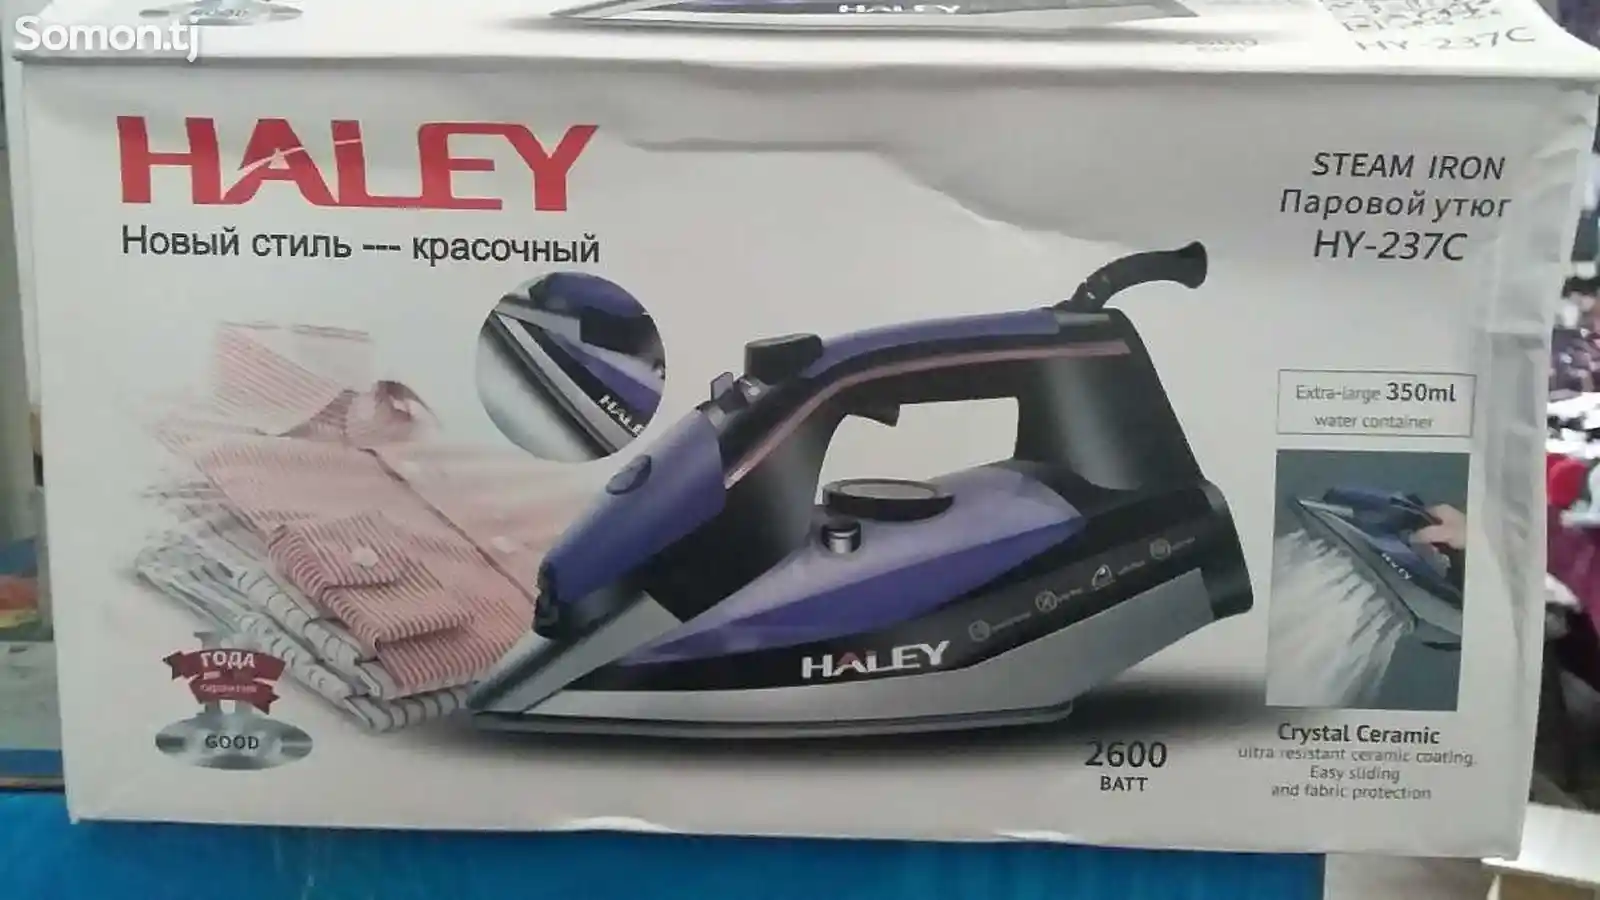 Утюг Haley-1